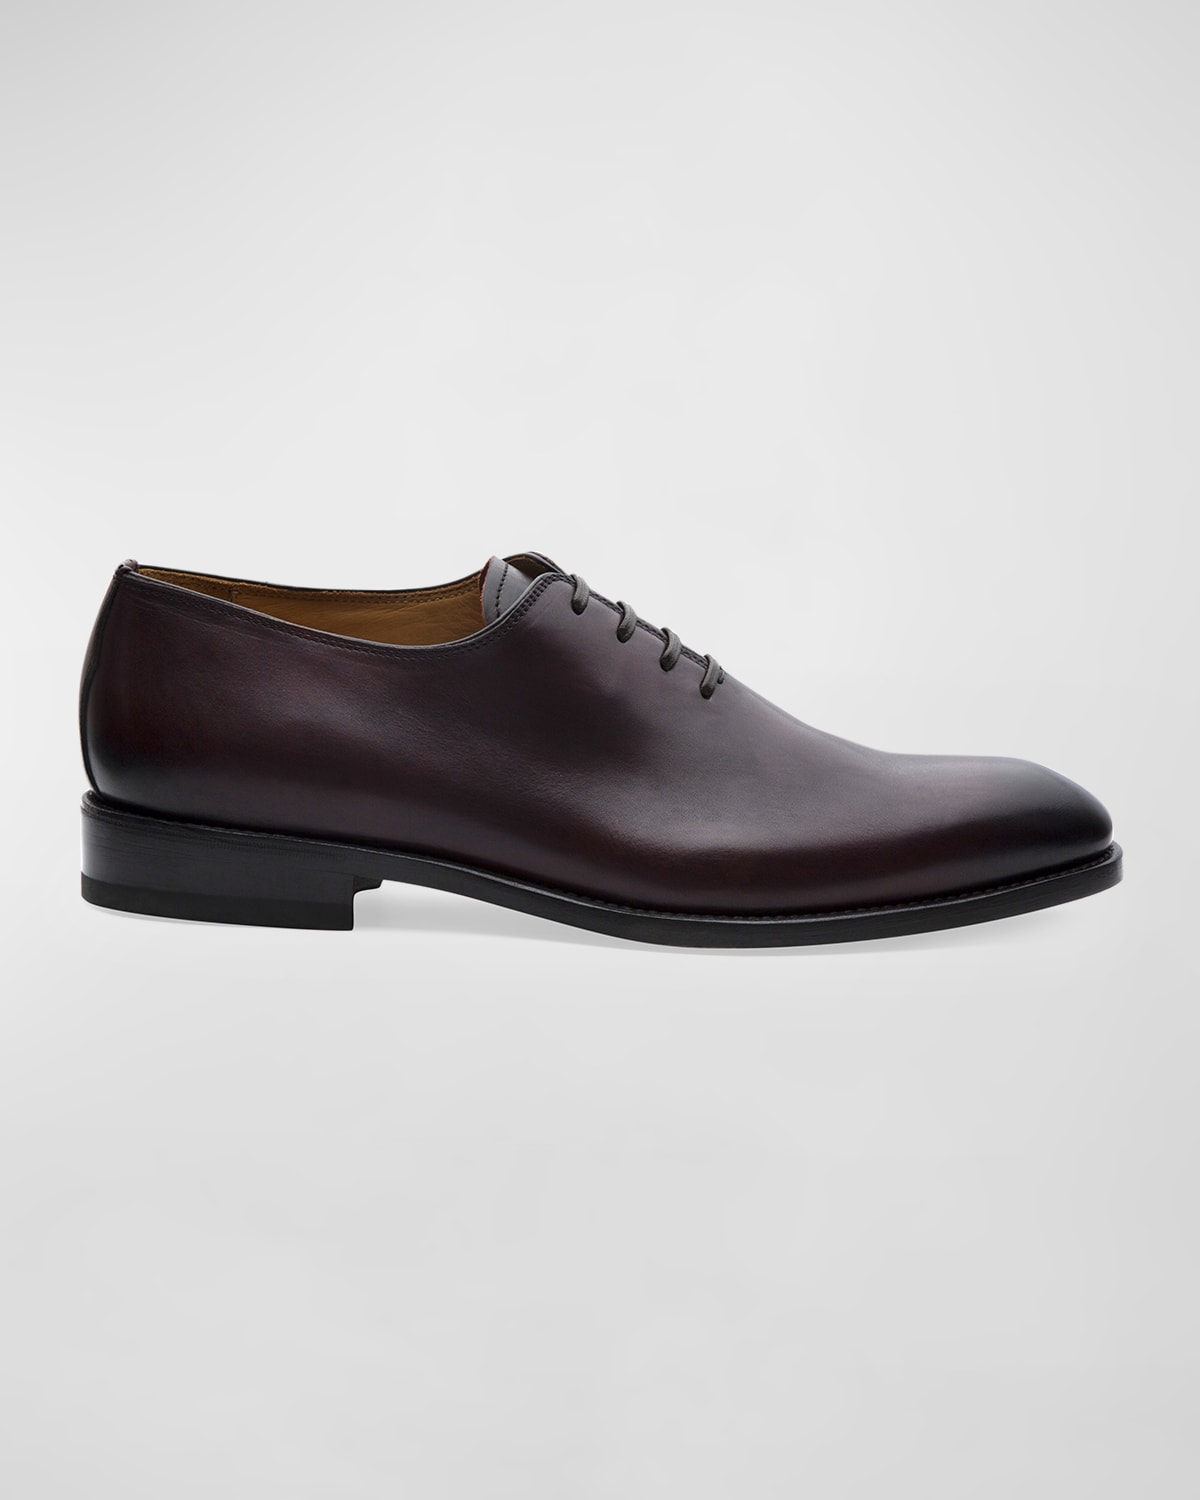 Christian Louboutin Men's Greggo Patent Leather Oxford Shoes | Neiman ...